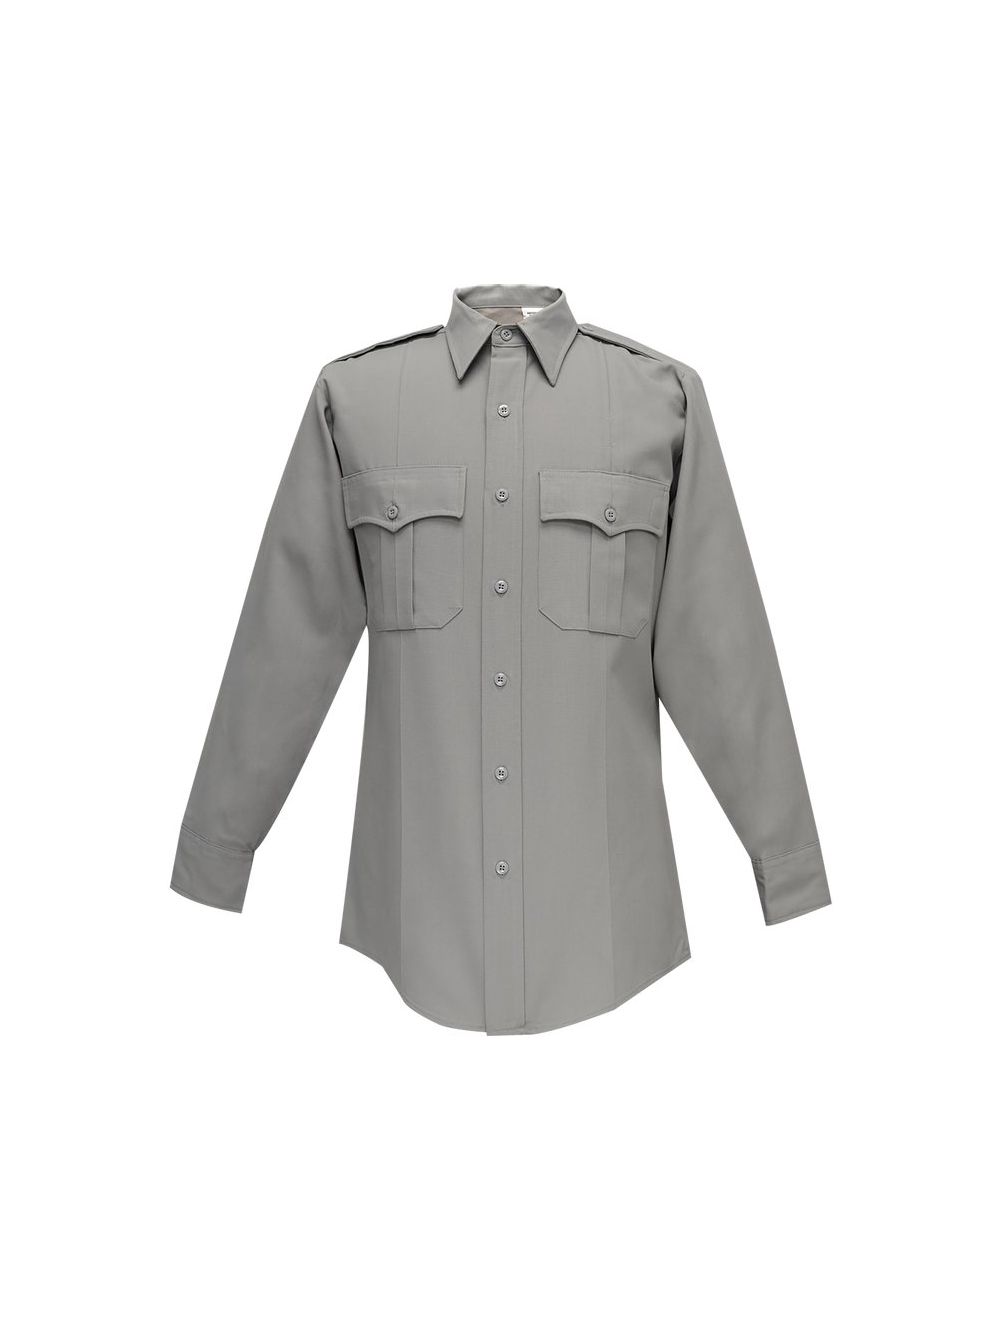 Flying Cross Command Long Sleeve Shirt with Zipper & Convertible Sport Collar - Gray, 21-21.5 x 34-35